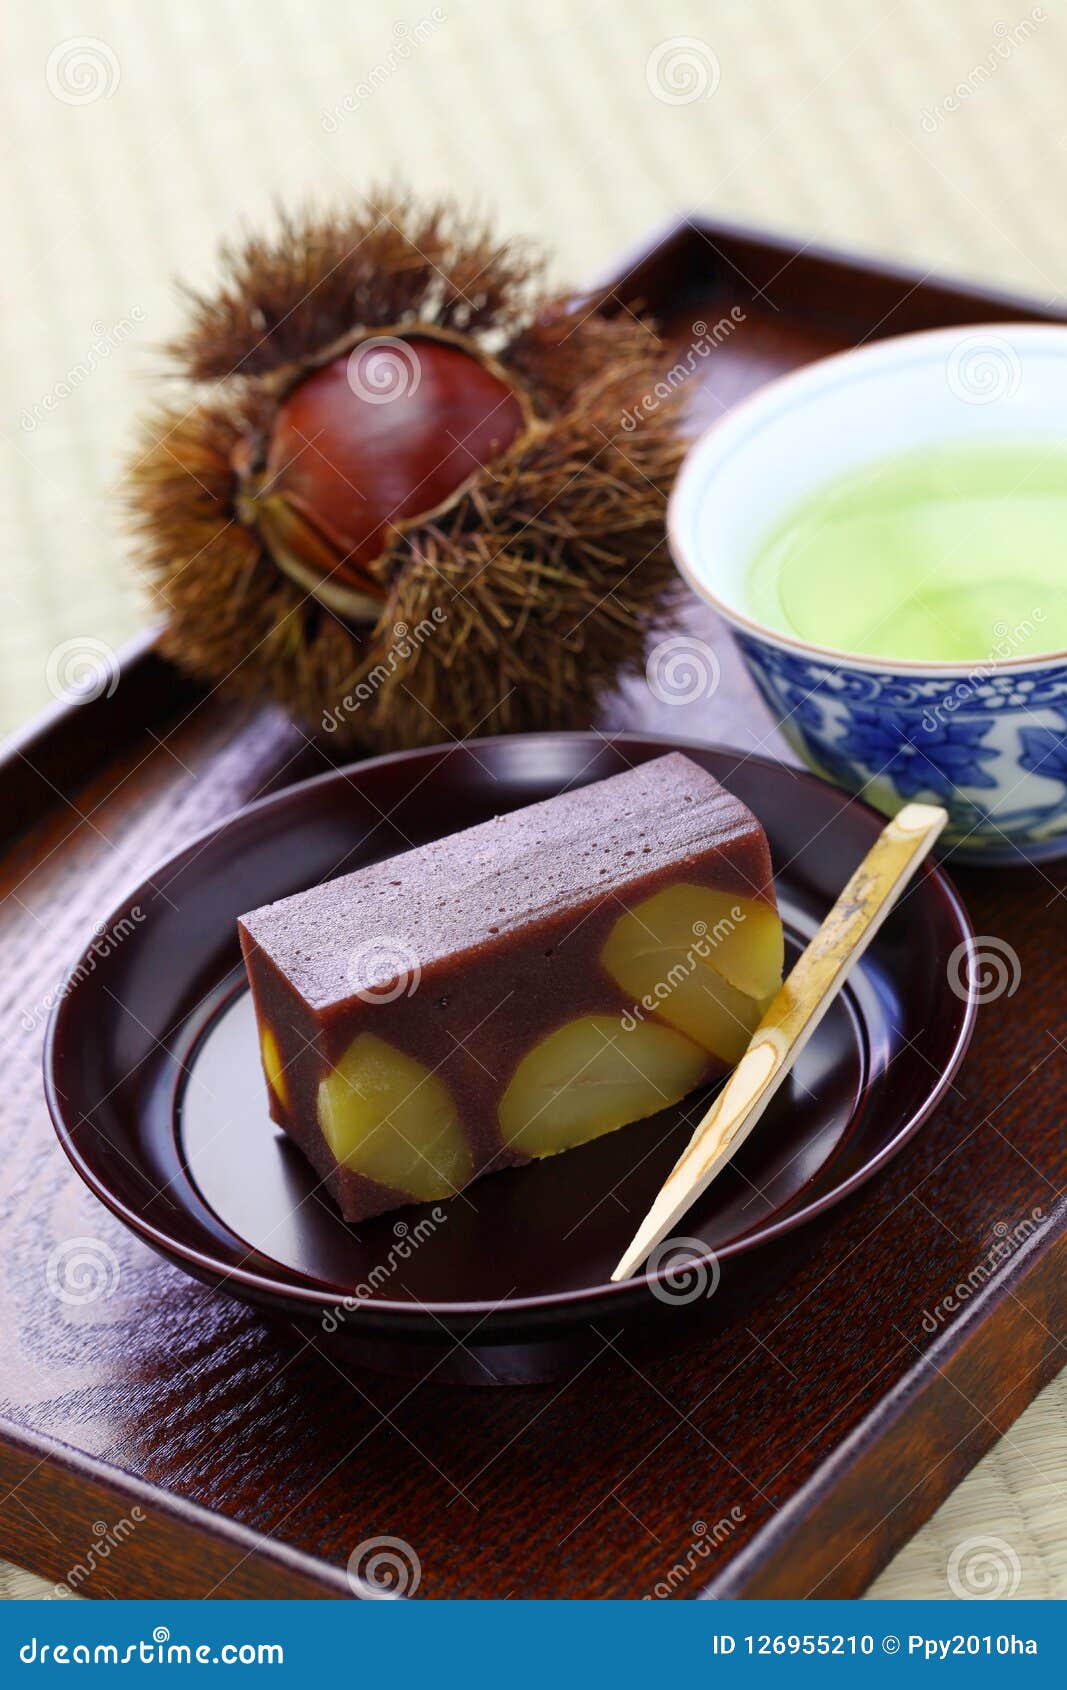 japanese traditional confection, kuri mushi yokan